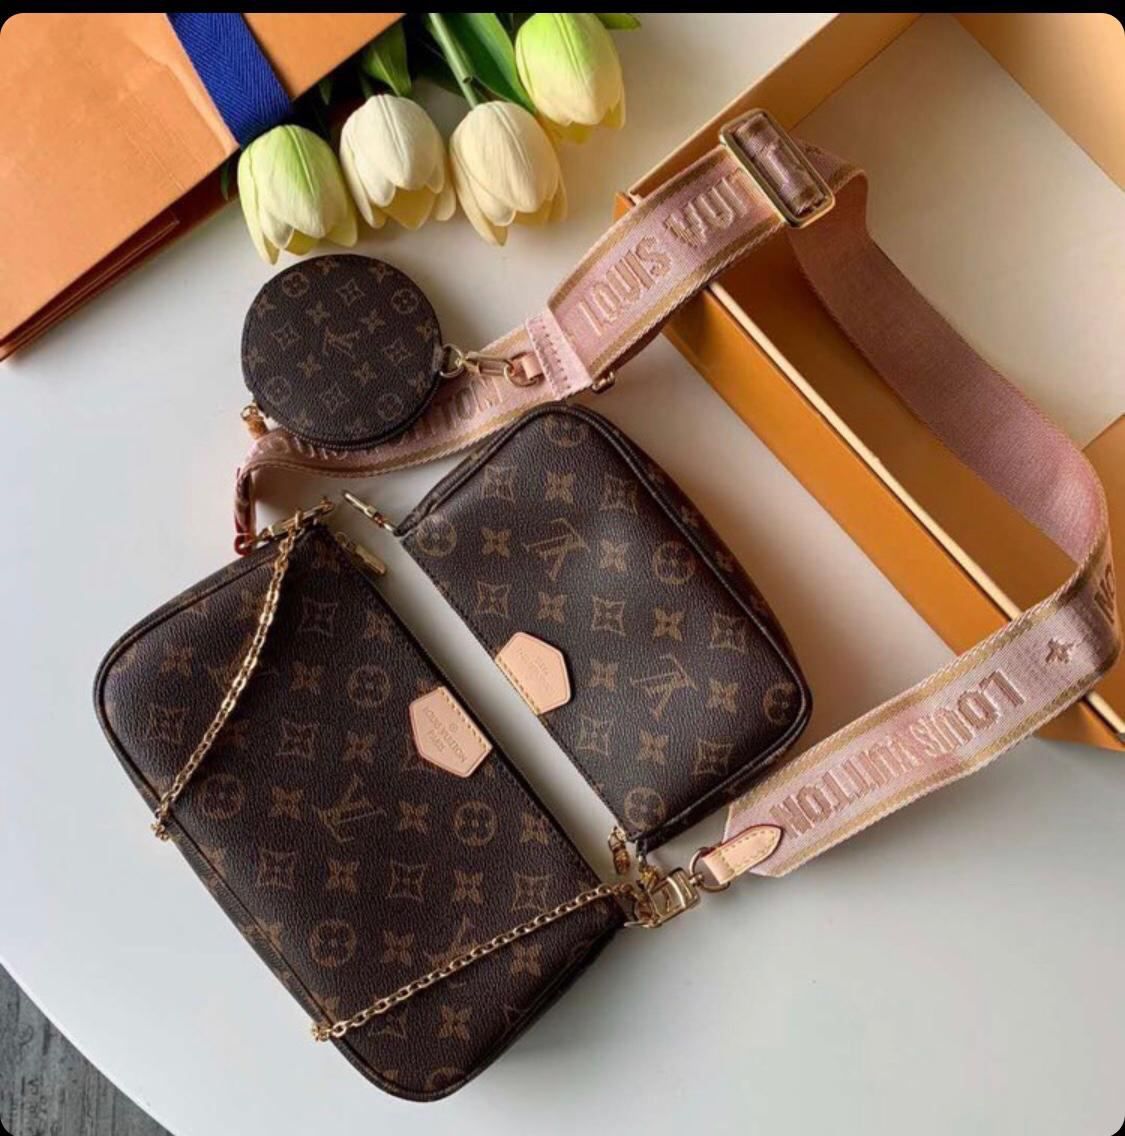 Hand bag Louis Vuitton